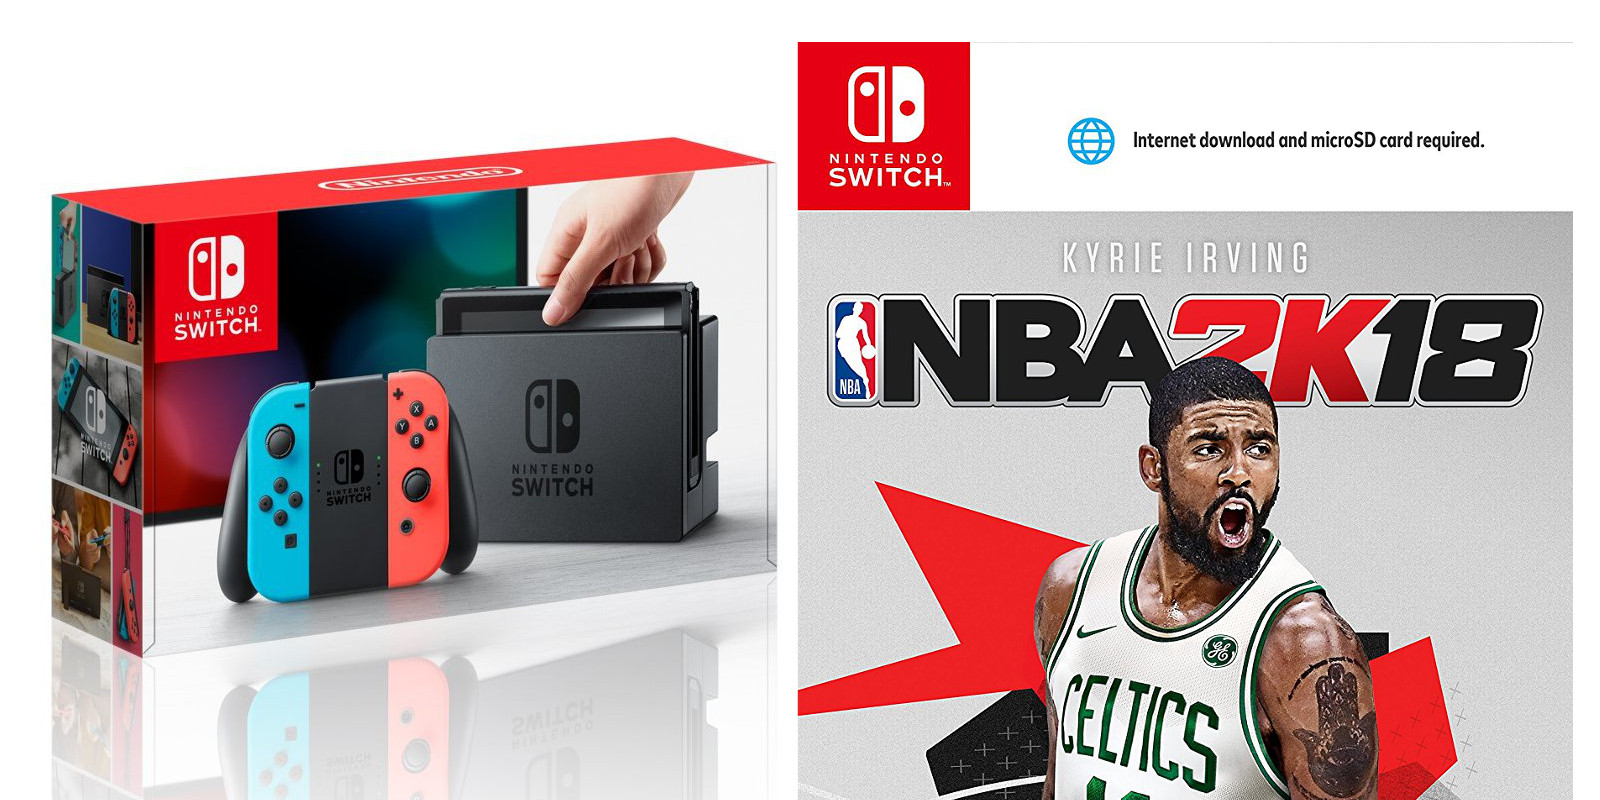 now offering FREE copy NBA 2K18 w/ Nintendo Switch: $299 ($340+ value)